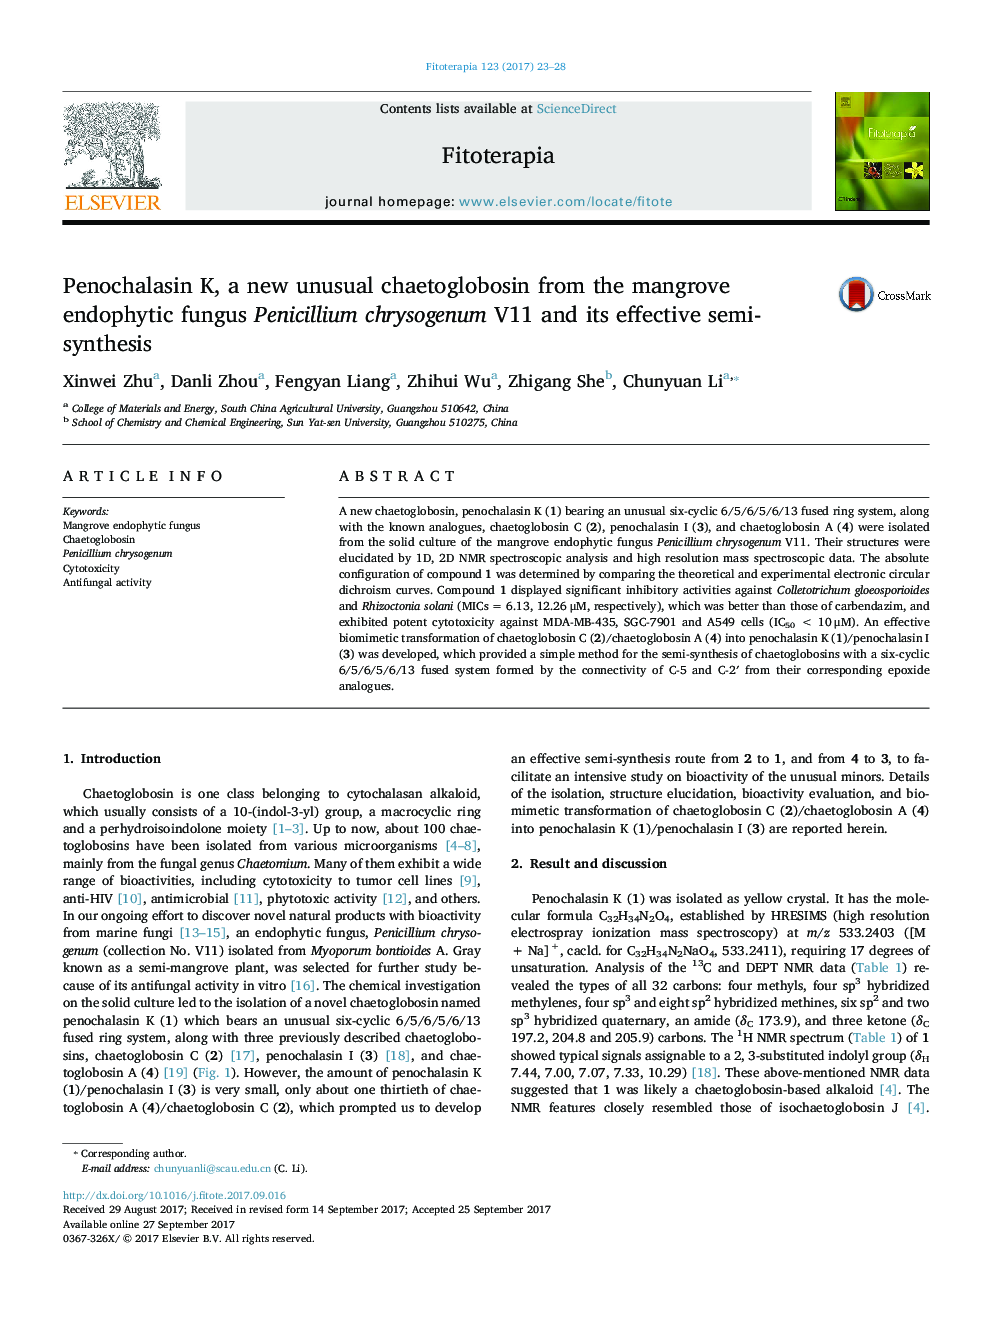 Penochalasin K, a new unusual chaetoglobosin from the mangrove endophytic fungus Penicillium chrysogenum V11 and its effective semi-synthesis